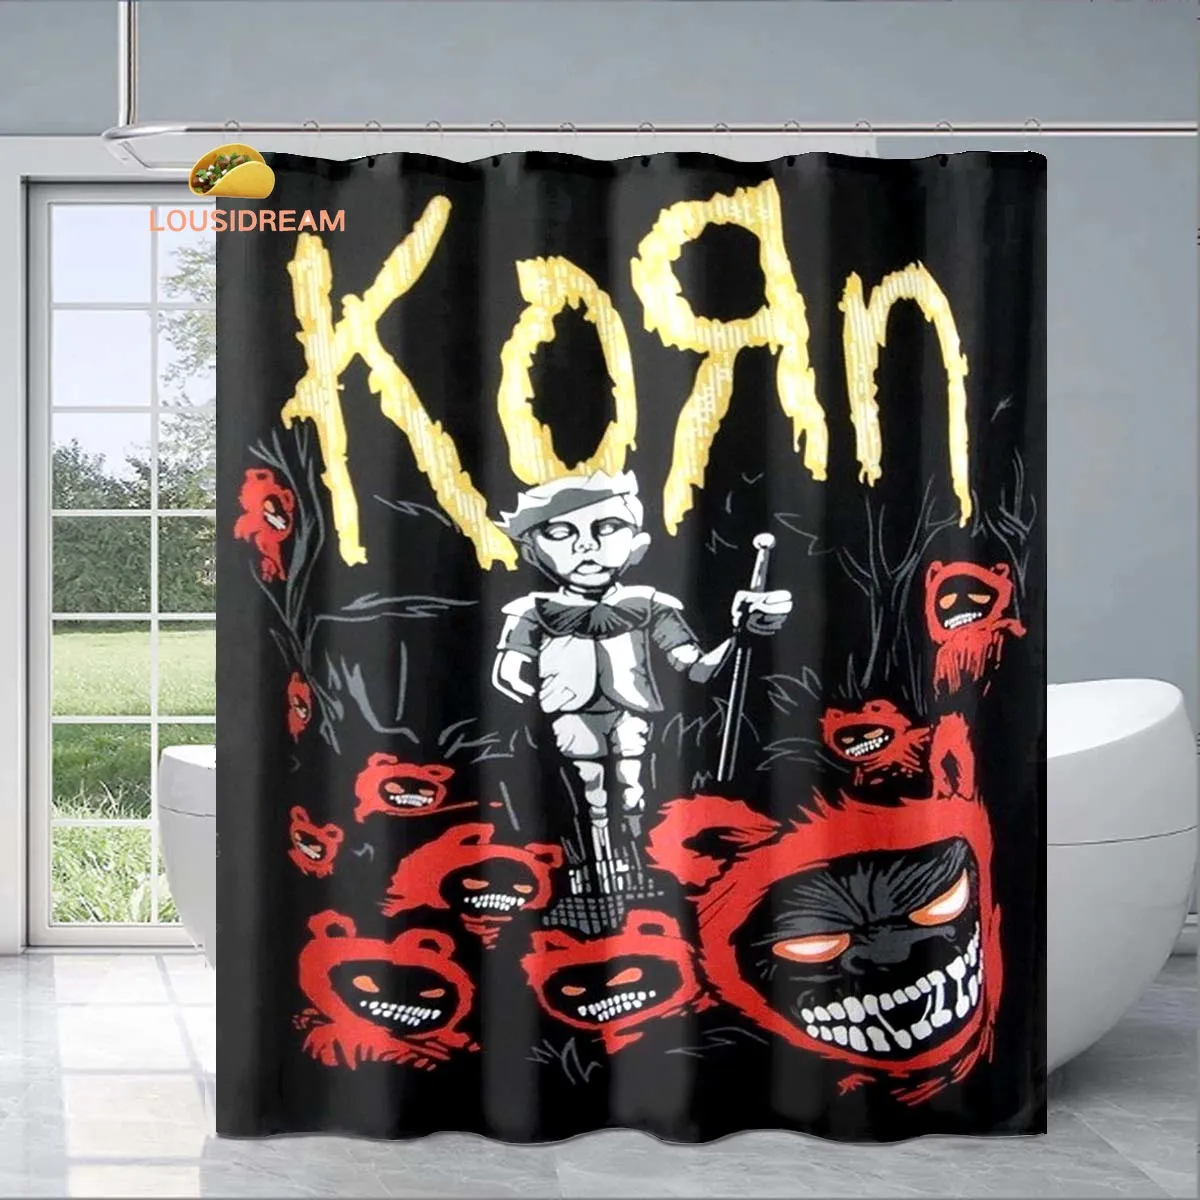 

Rock Band Korn Logo Exquisite Shower Curtain Fashionable Decorative Gift for Adult Children Bathroom Waterproof Mildew-proof